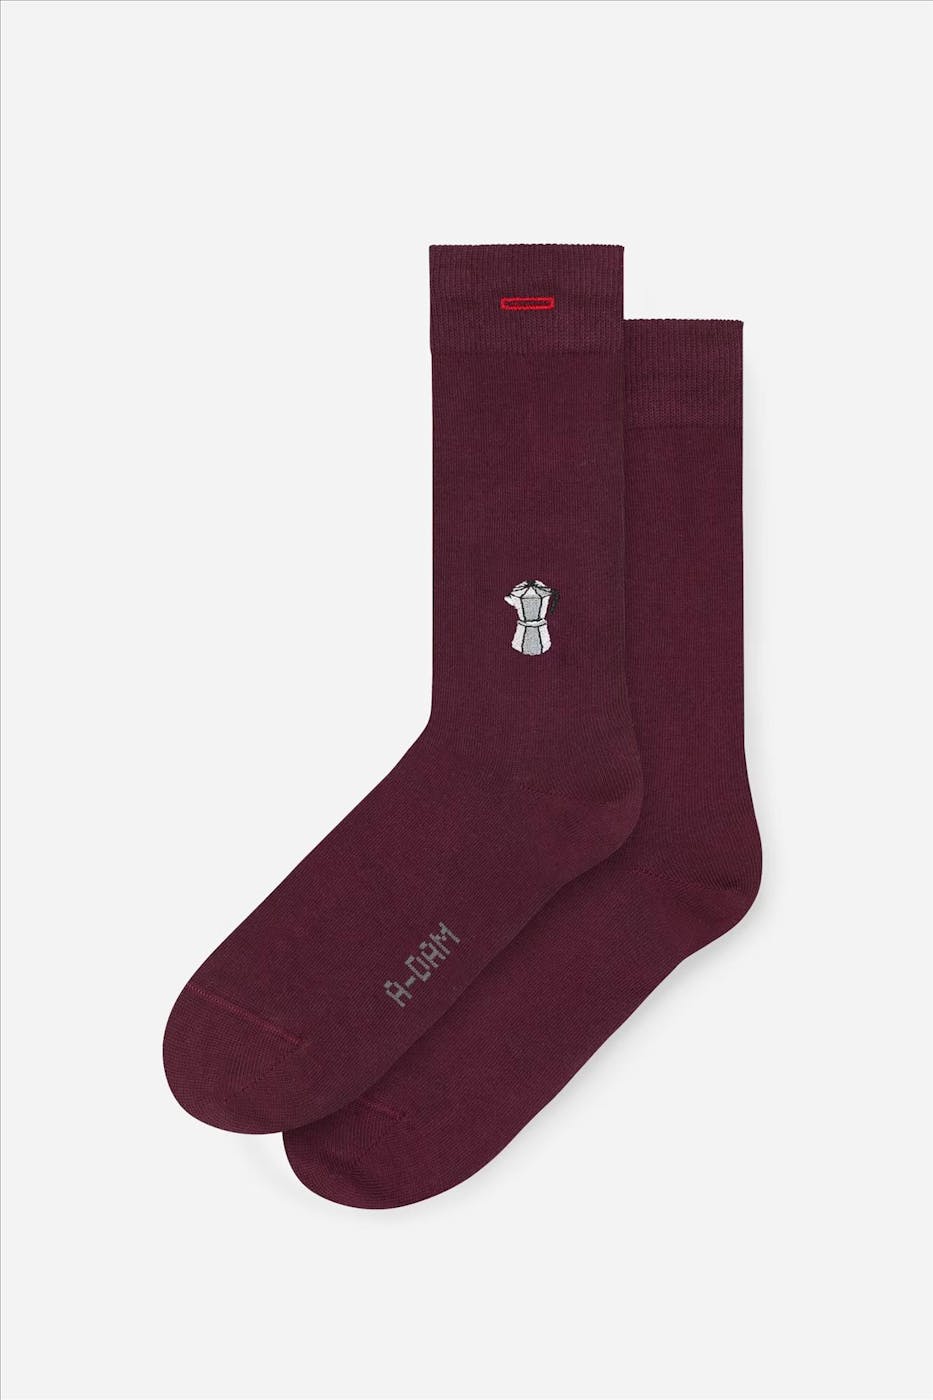 A'dam - Bordeaux Percolator sokken, maat: 41-46